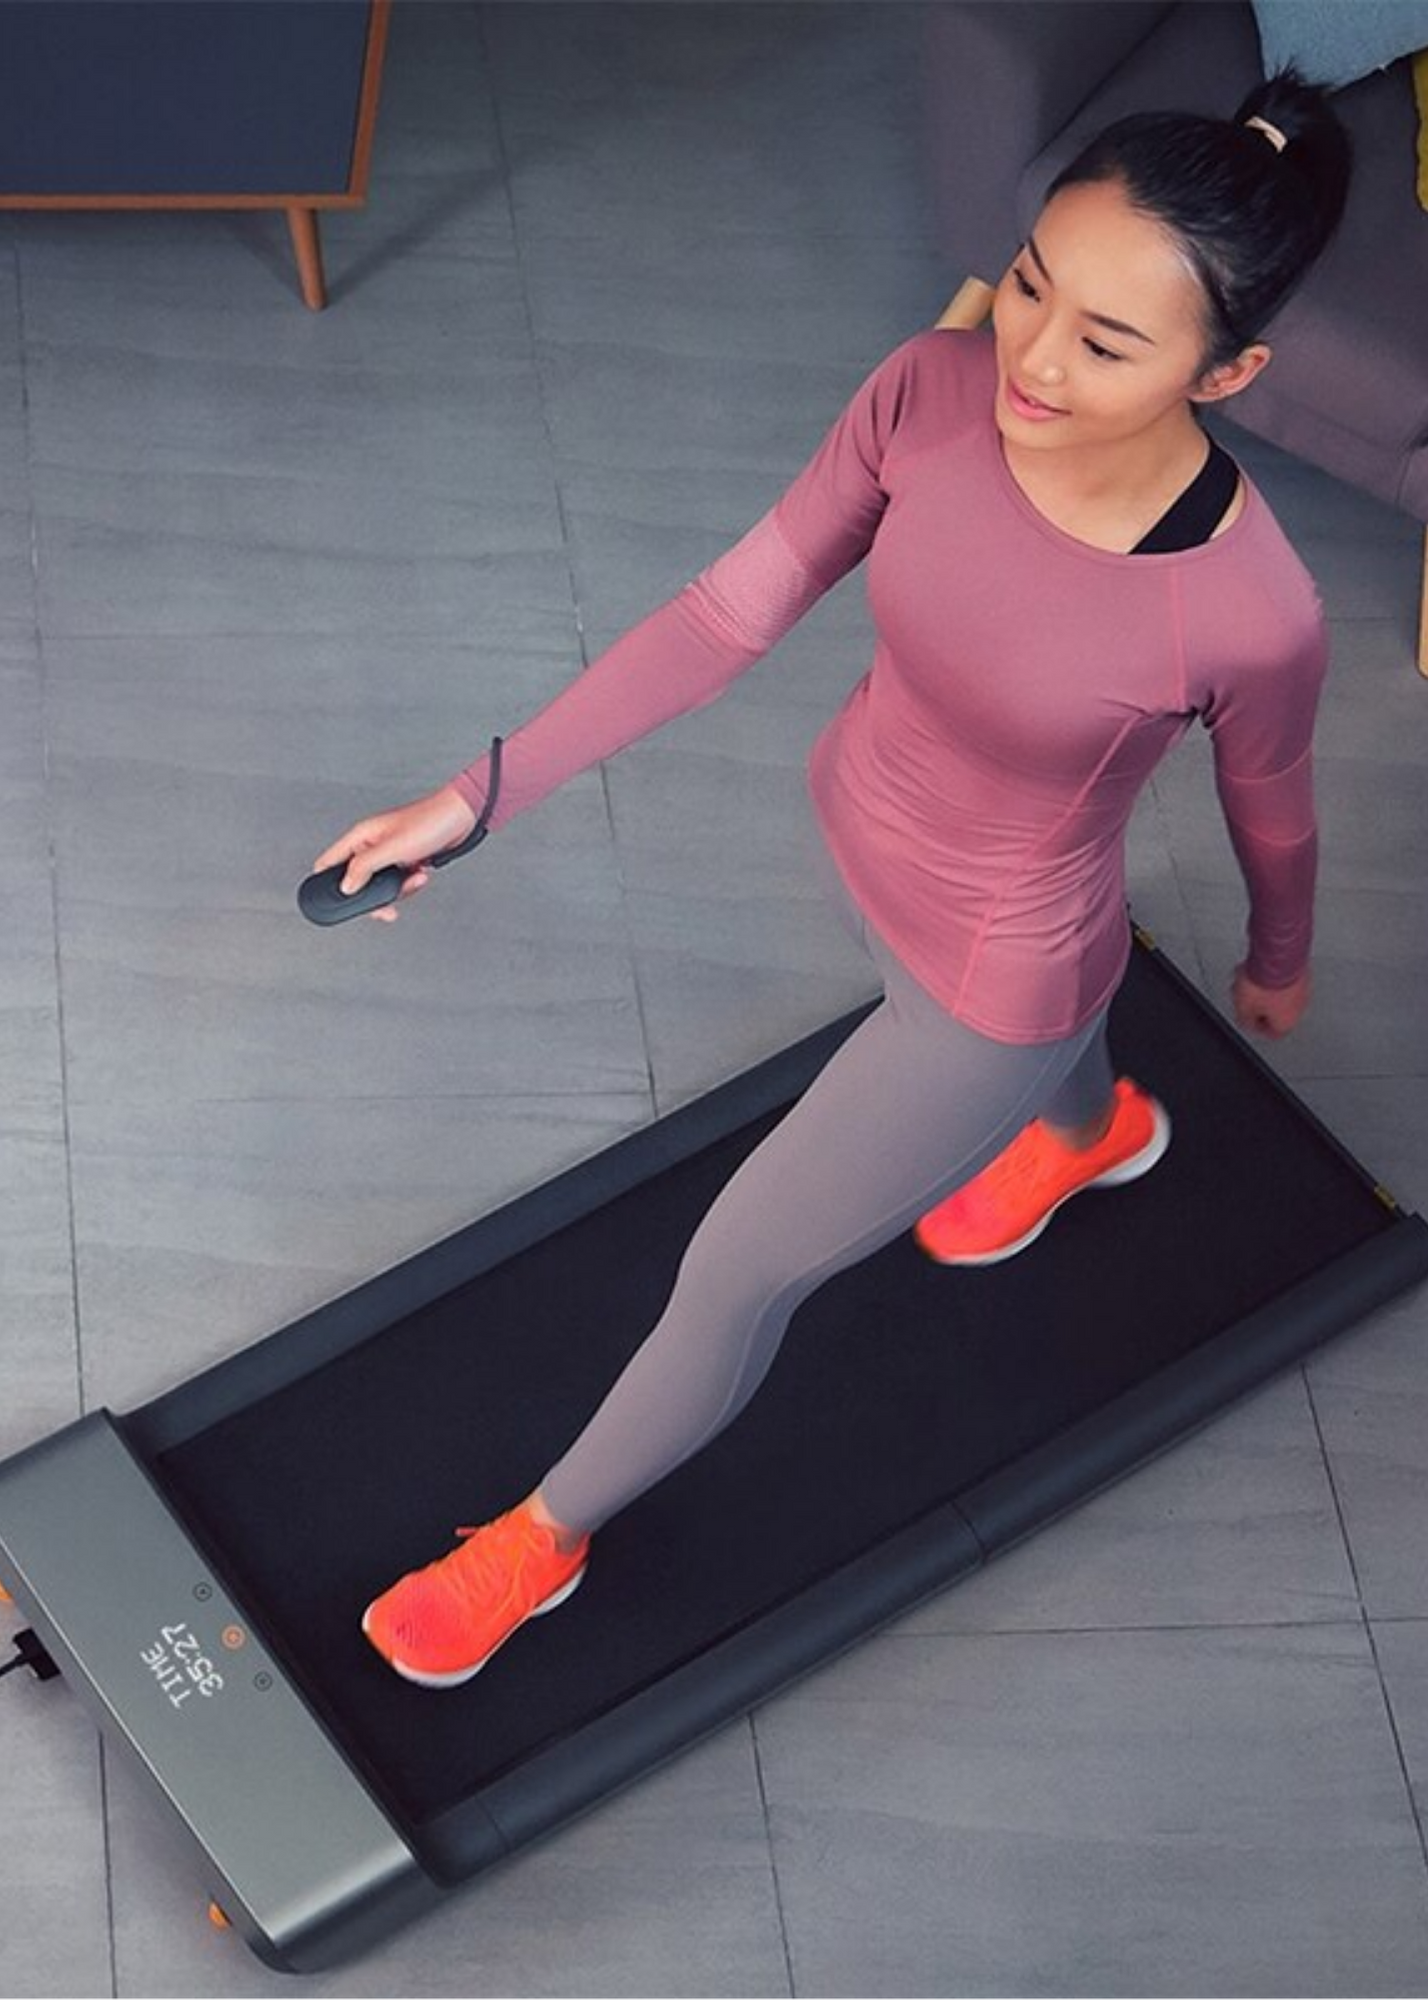 WalkingPad High-Quality Foldable Treadmill